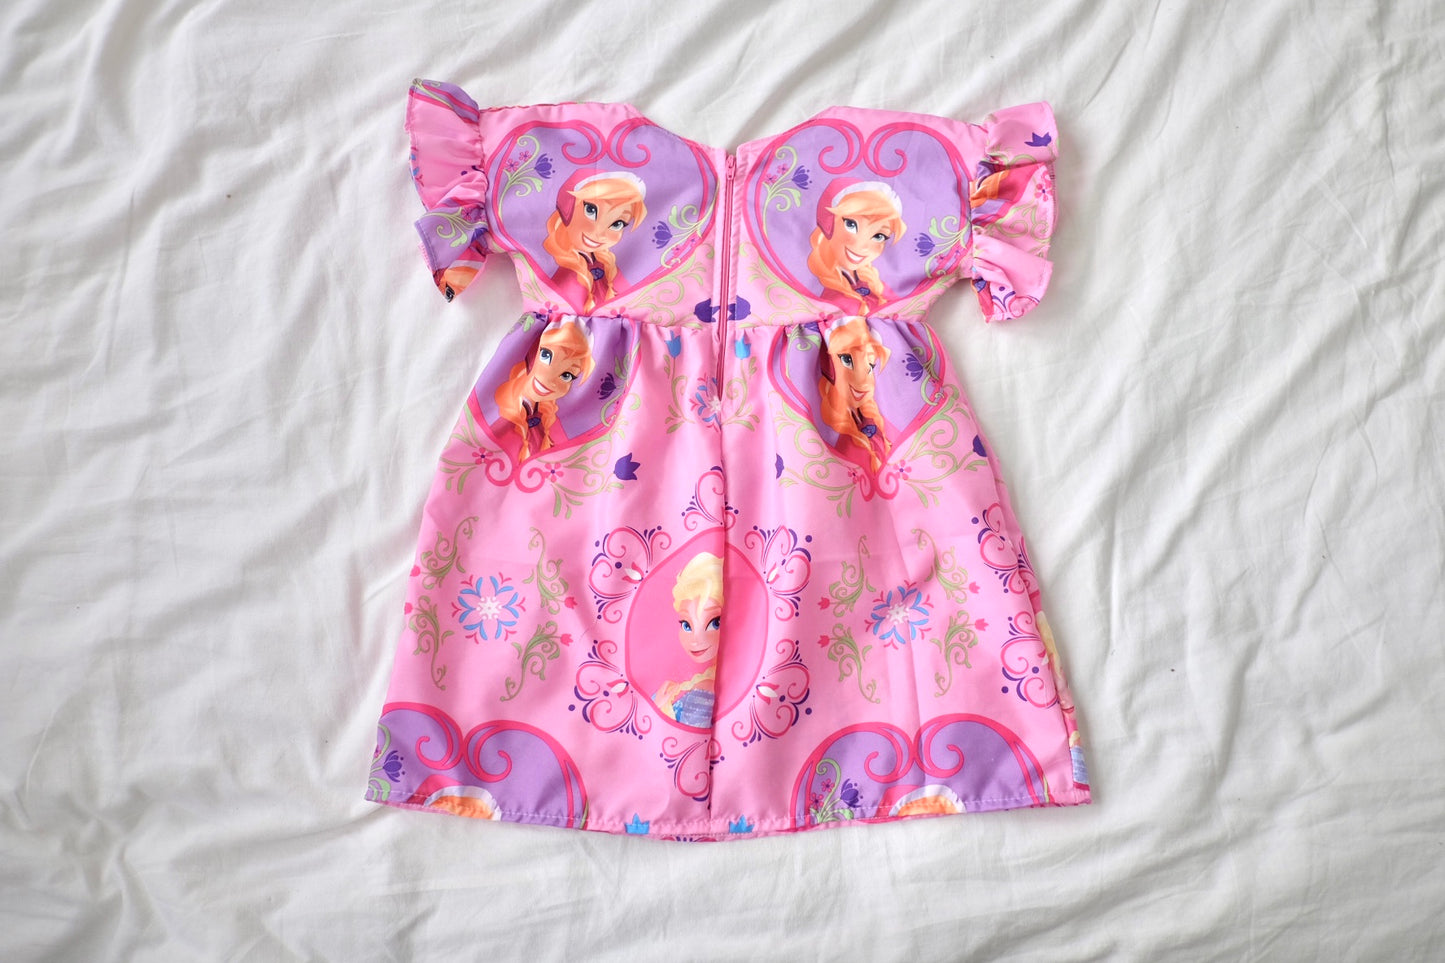 custom kid's smock dress